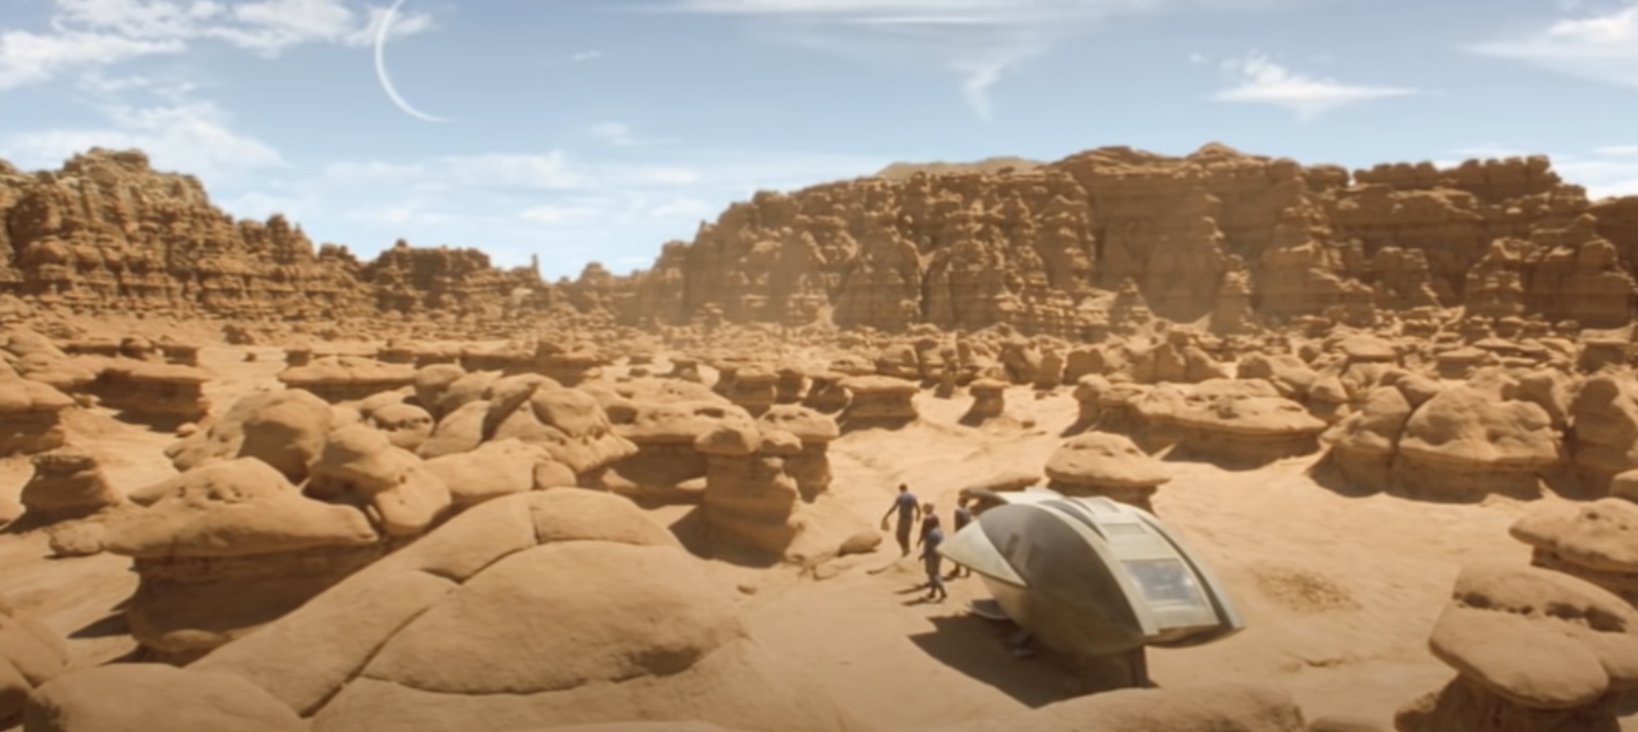 A spaceship lands on a desert planet